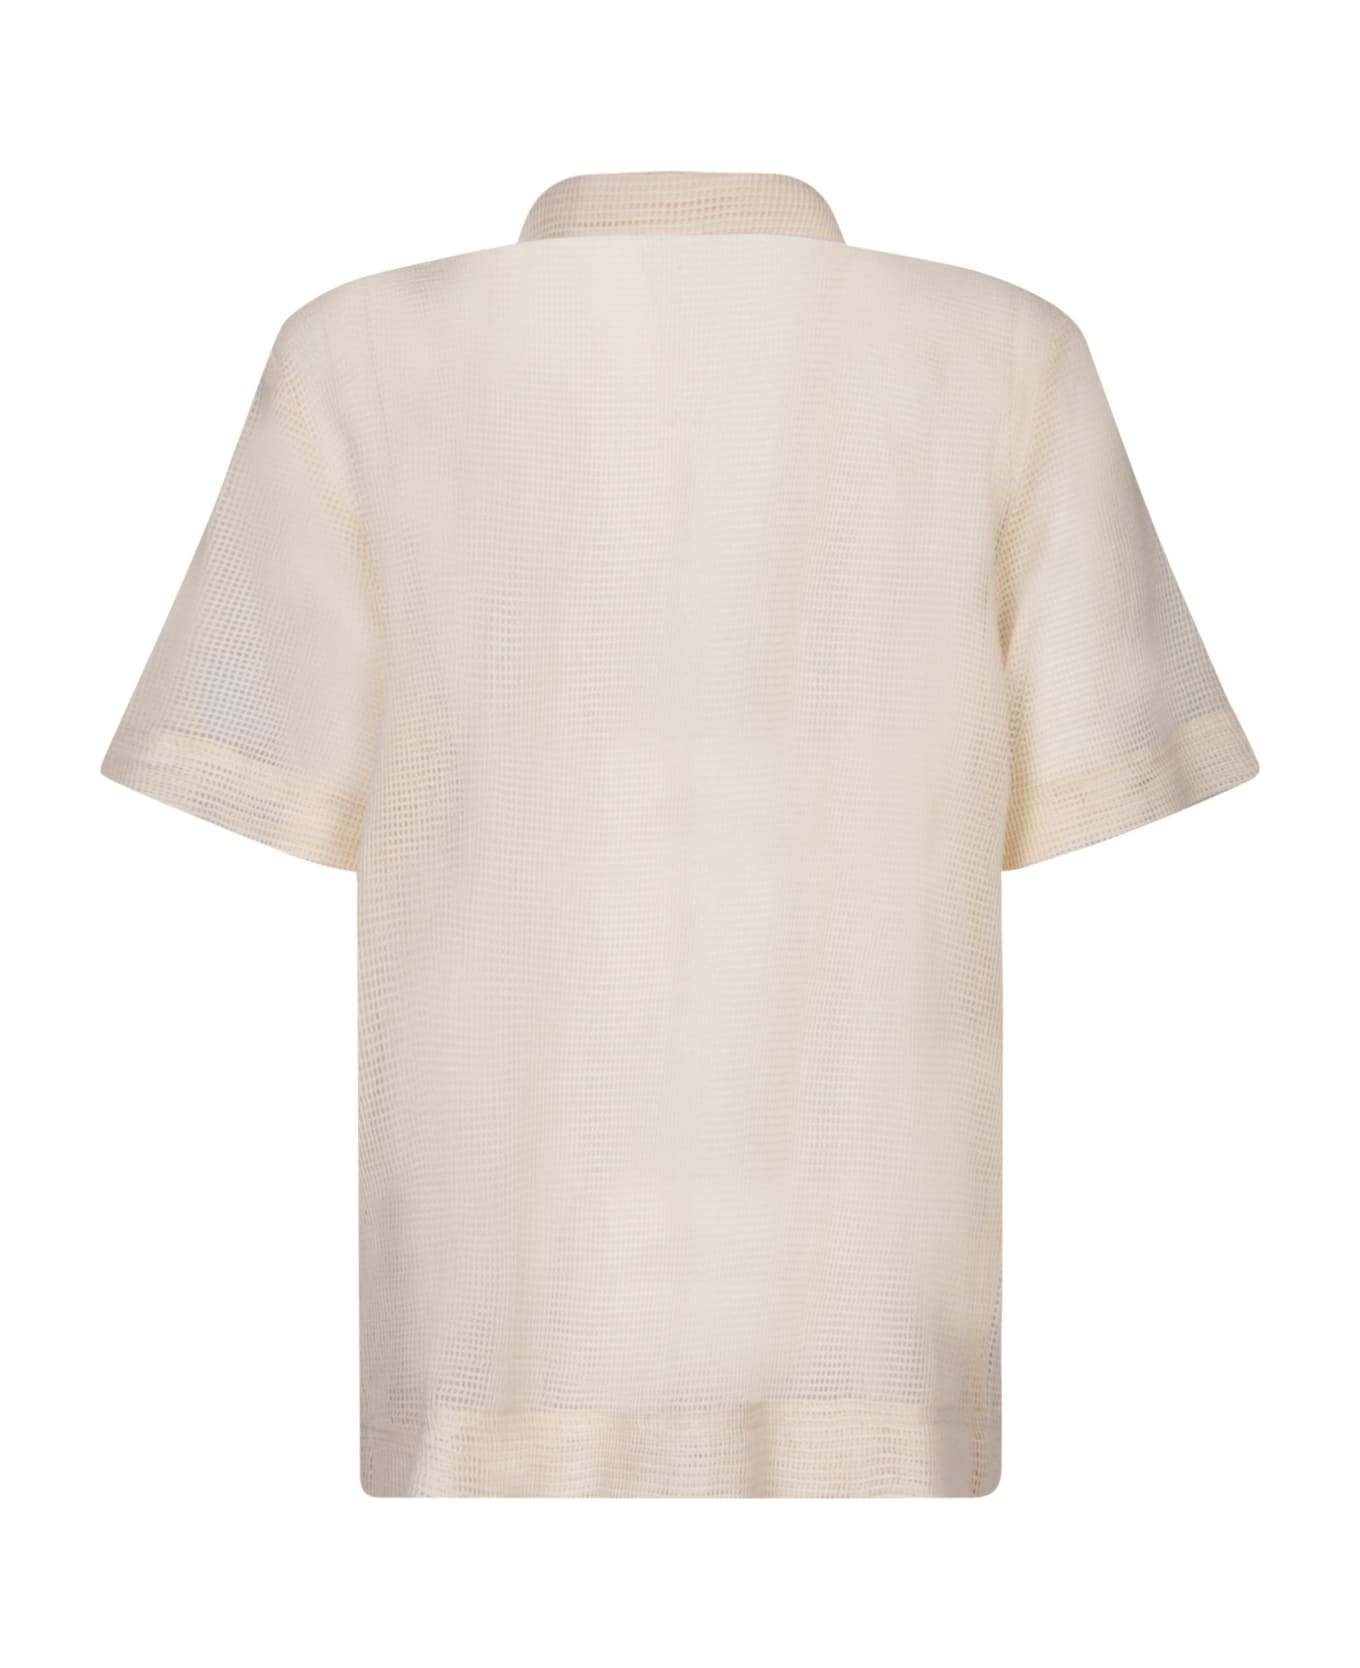 Séfr Sefr Noam Beige Textured Shirt - Beige シャツ